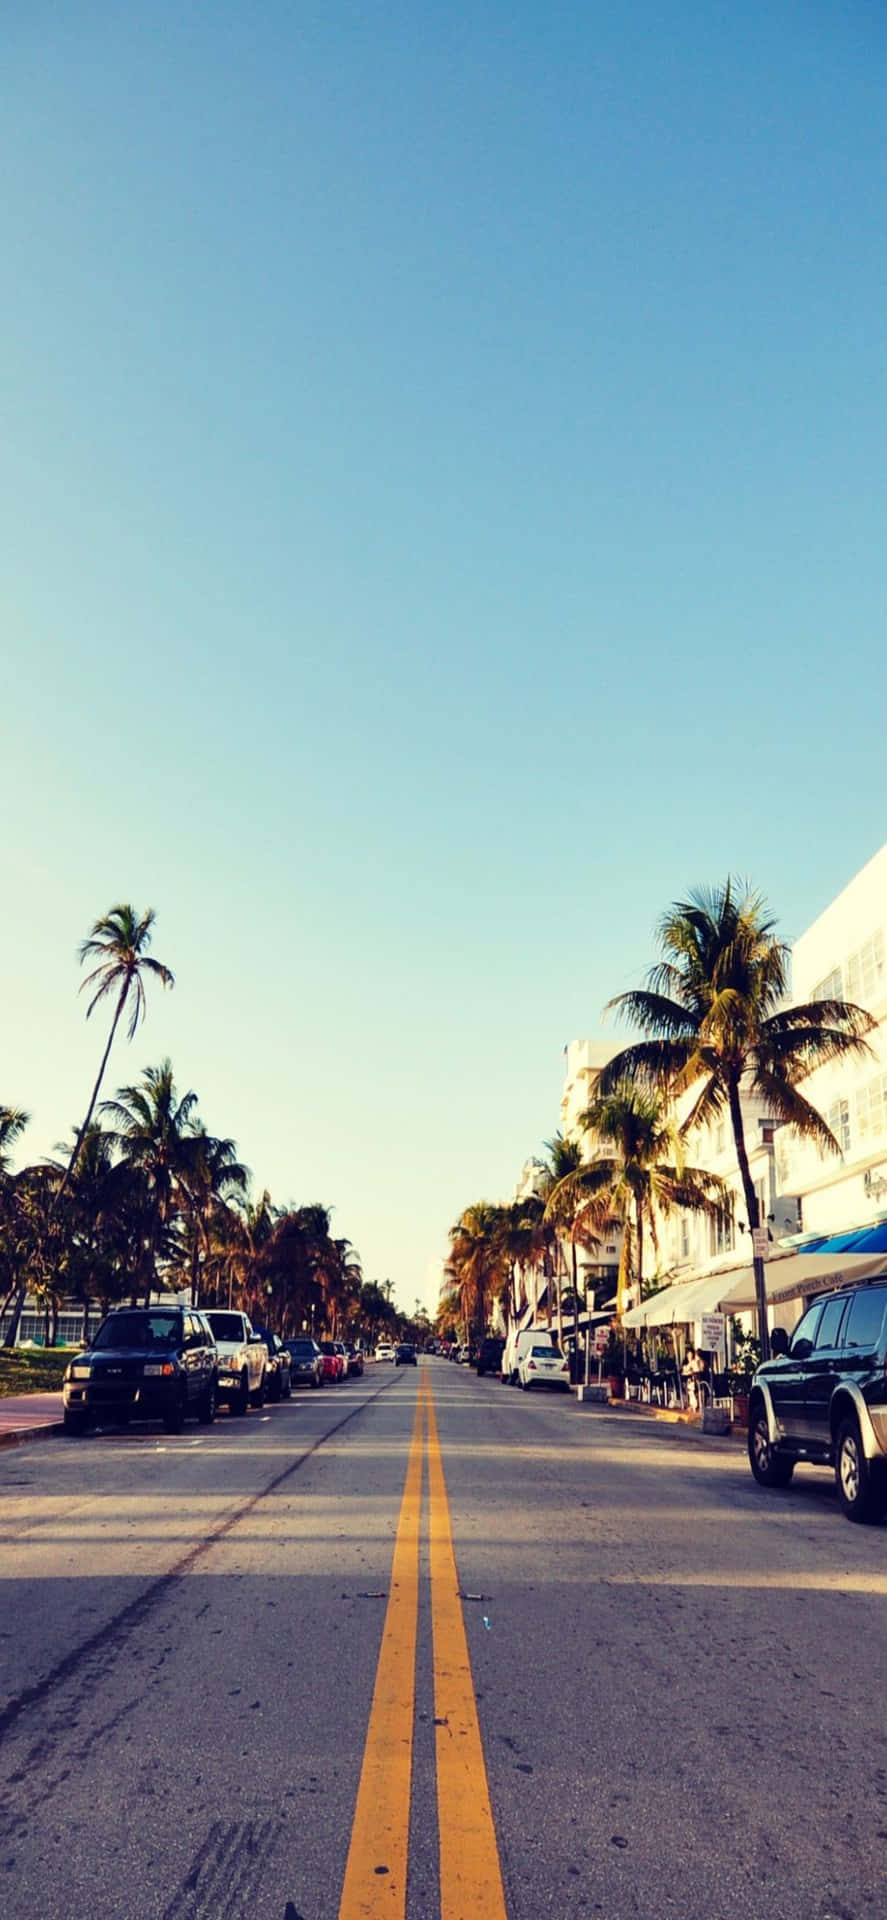 iPhone XS Miami Beach Background